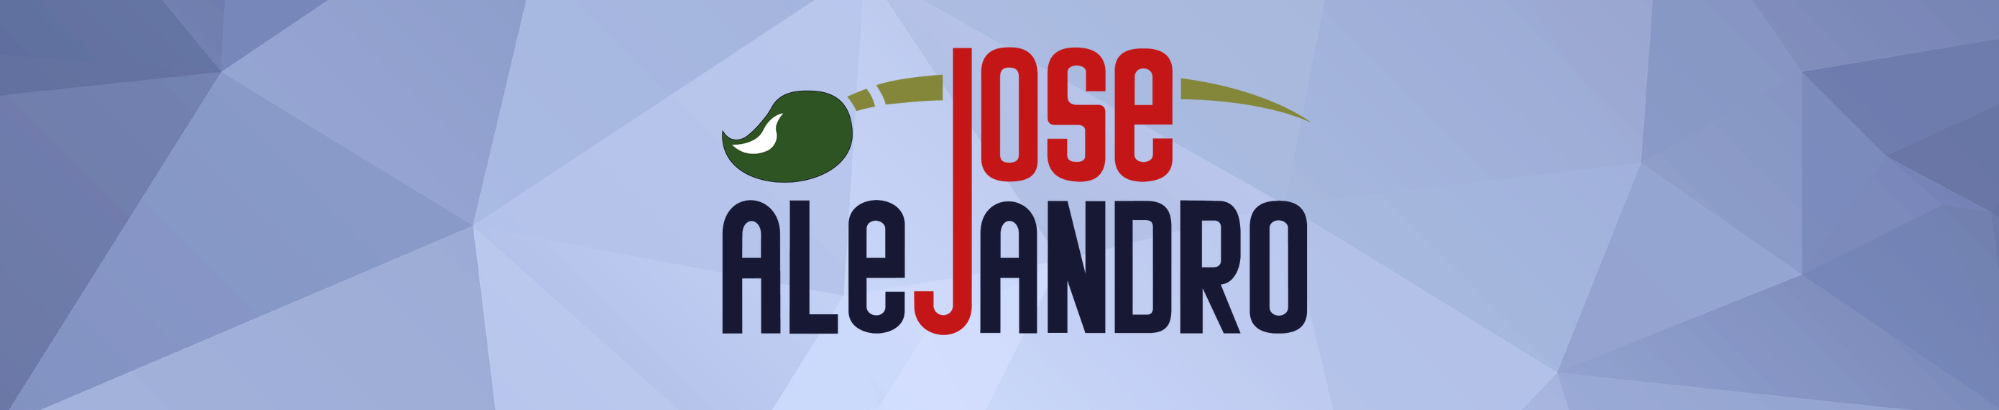 Jose Alejandro profil başlığı